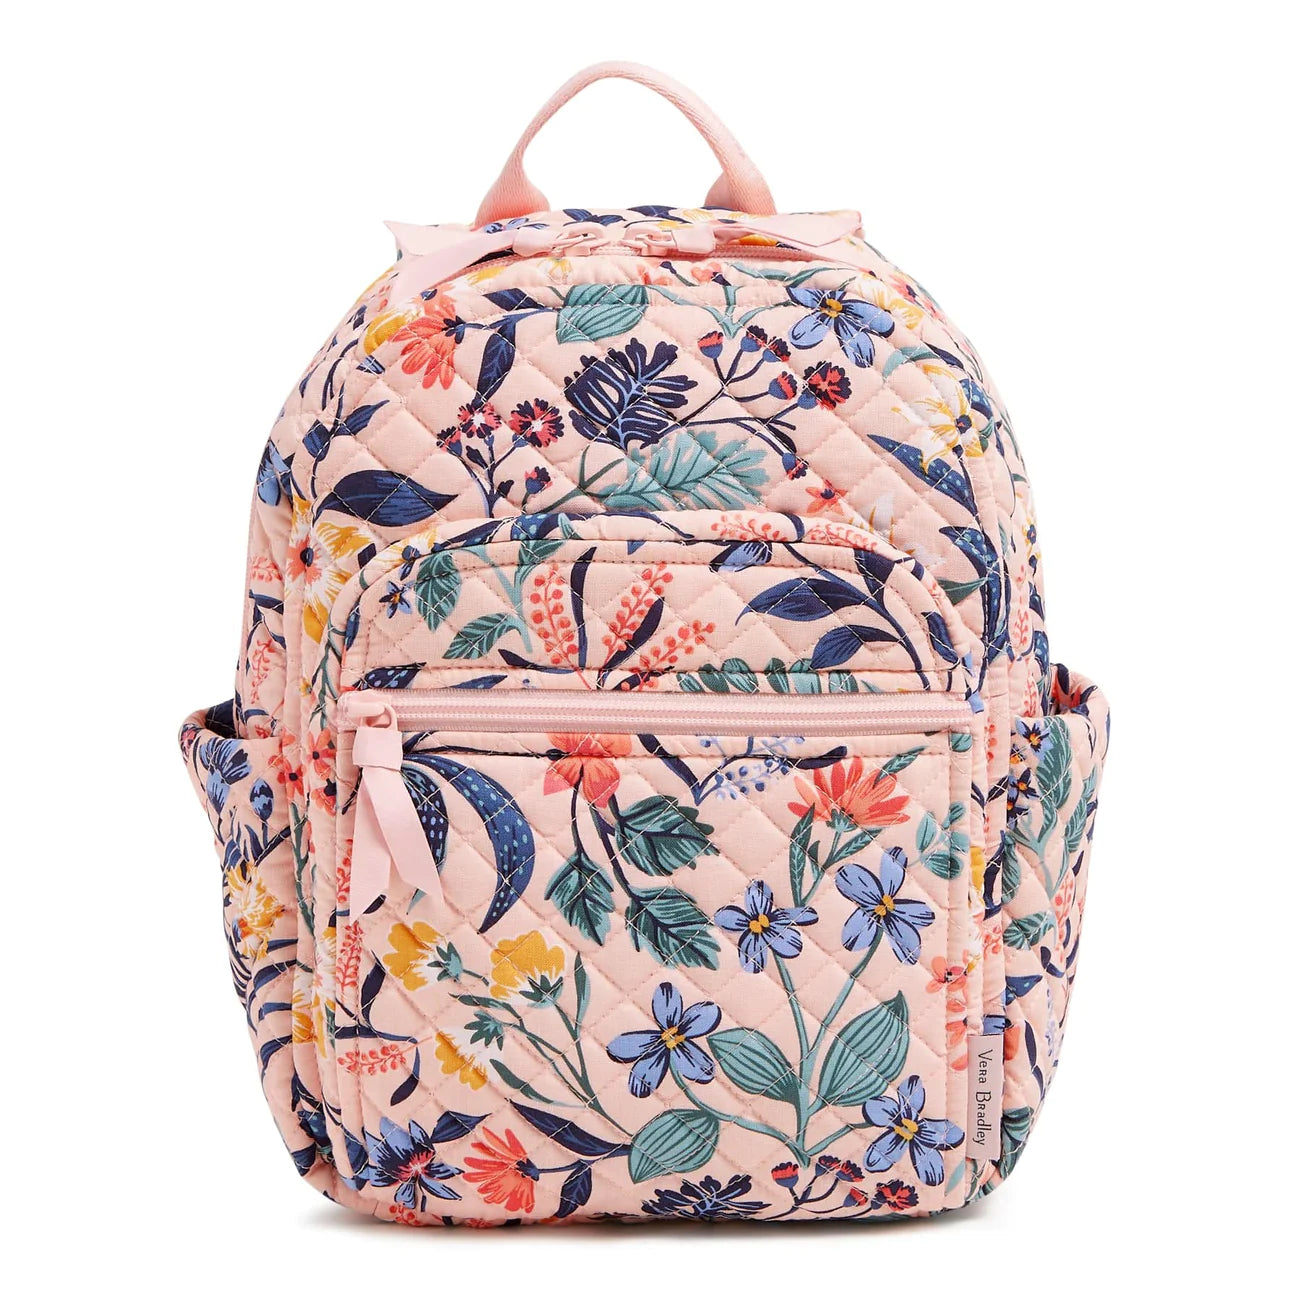 Small Backpack : Paradise Coral - Vera Bradley - Image 1